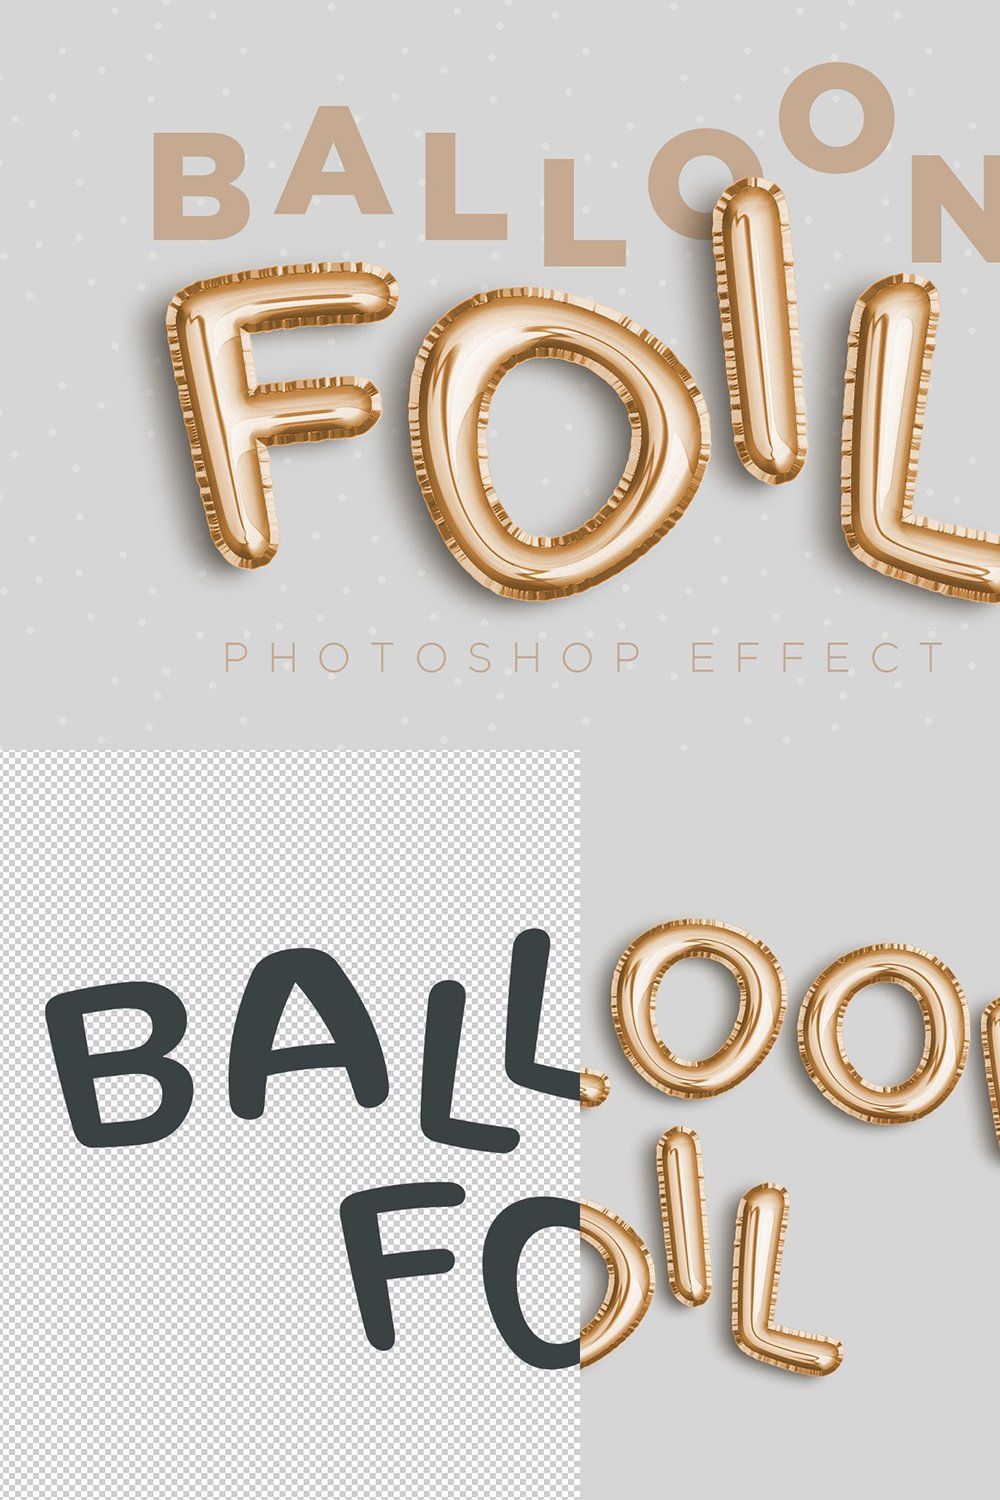 Foil Balloon Photoshop Effect pinterest preview image.